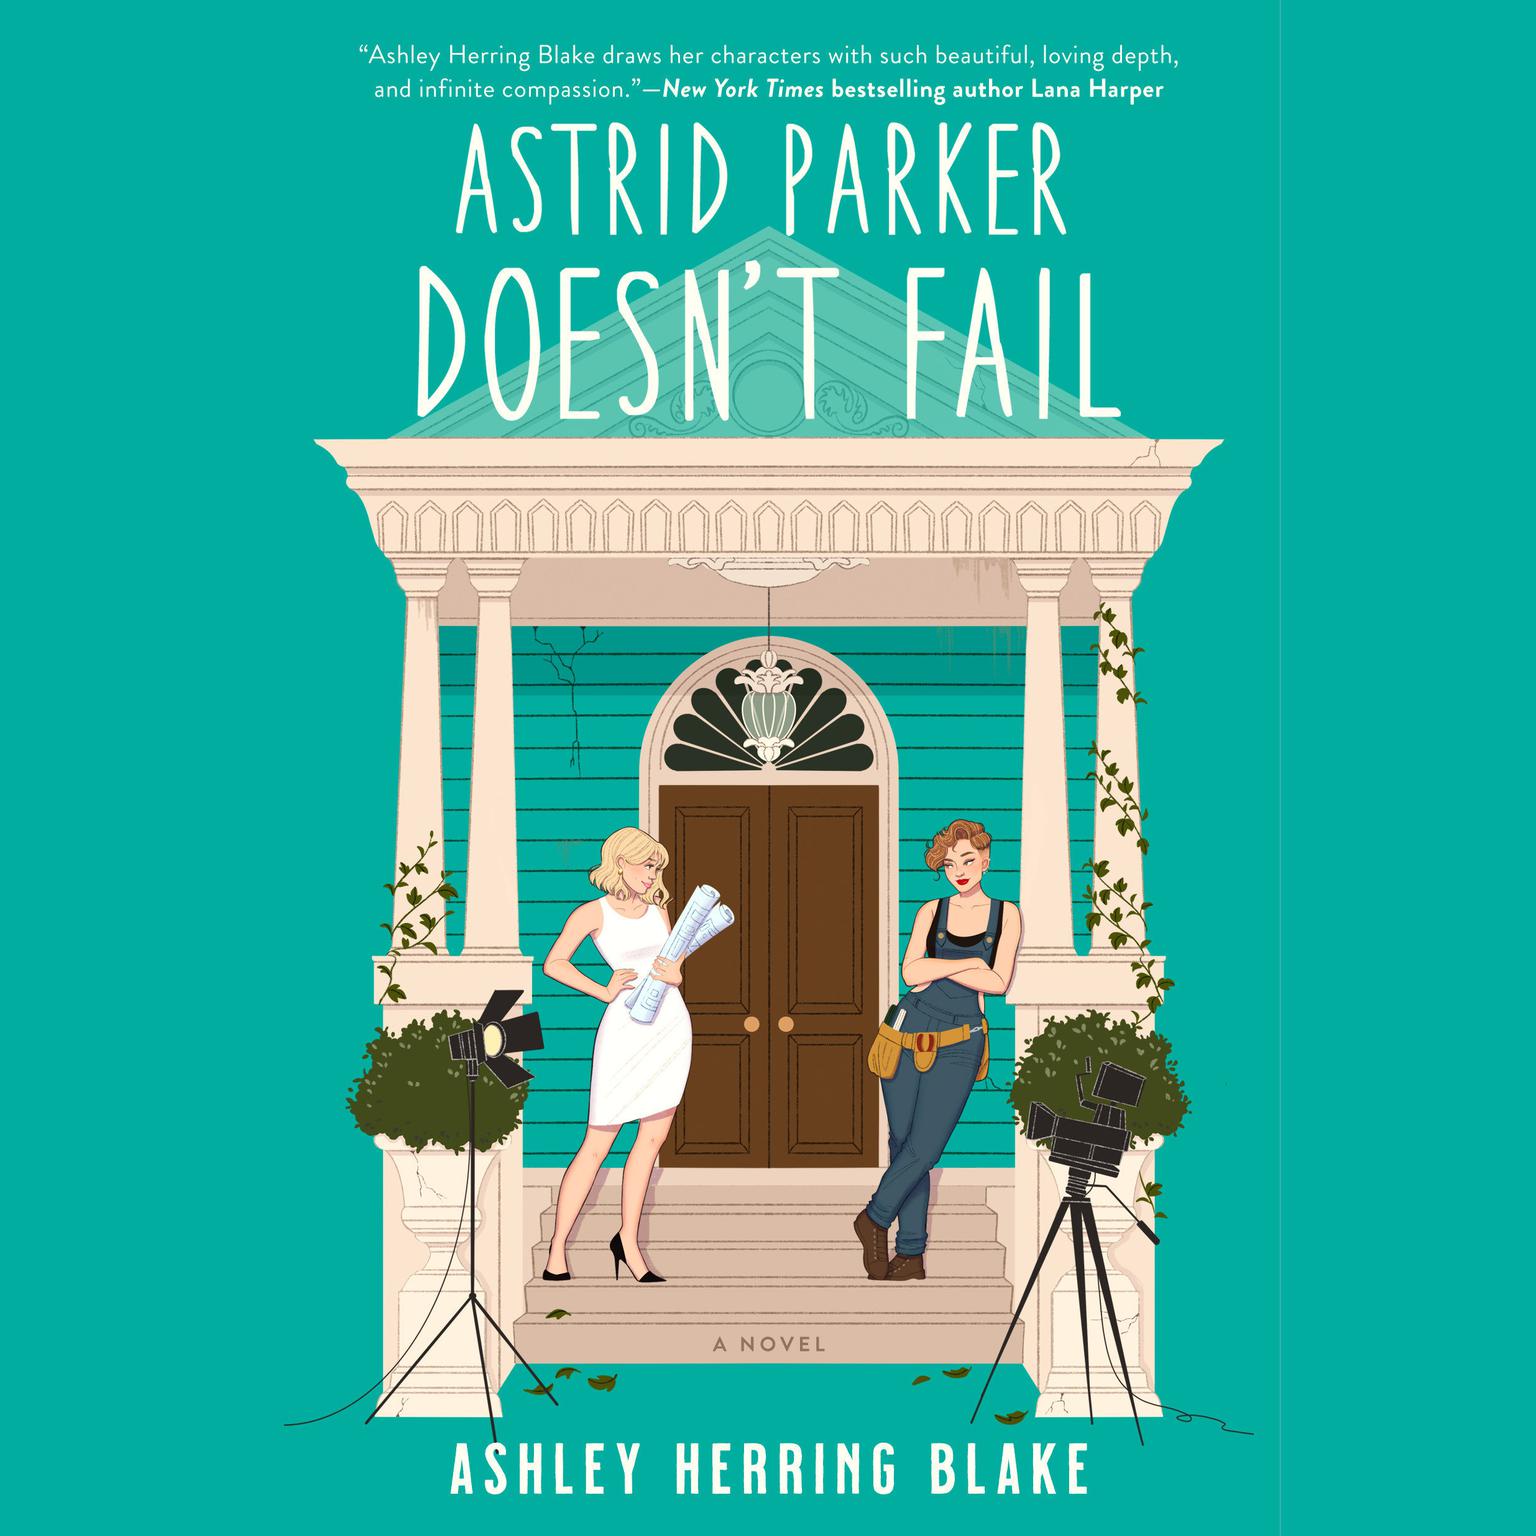 Astrid Parker Doesnt Fail Audiobook, by Ashley Herring Blake